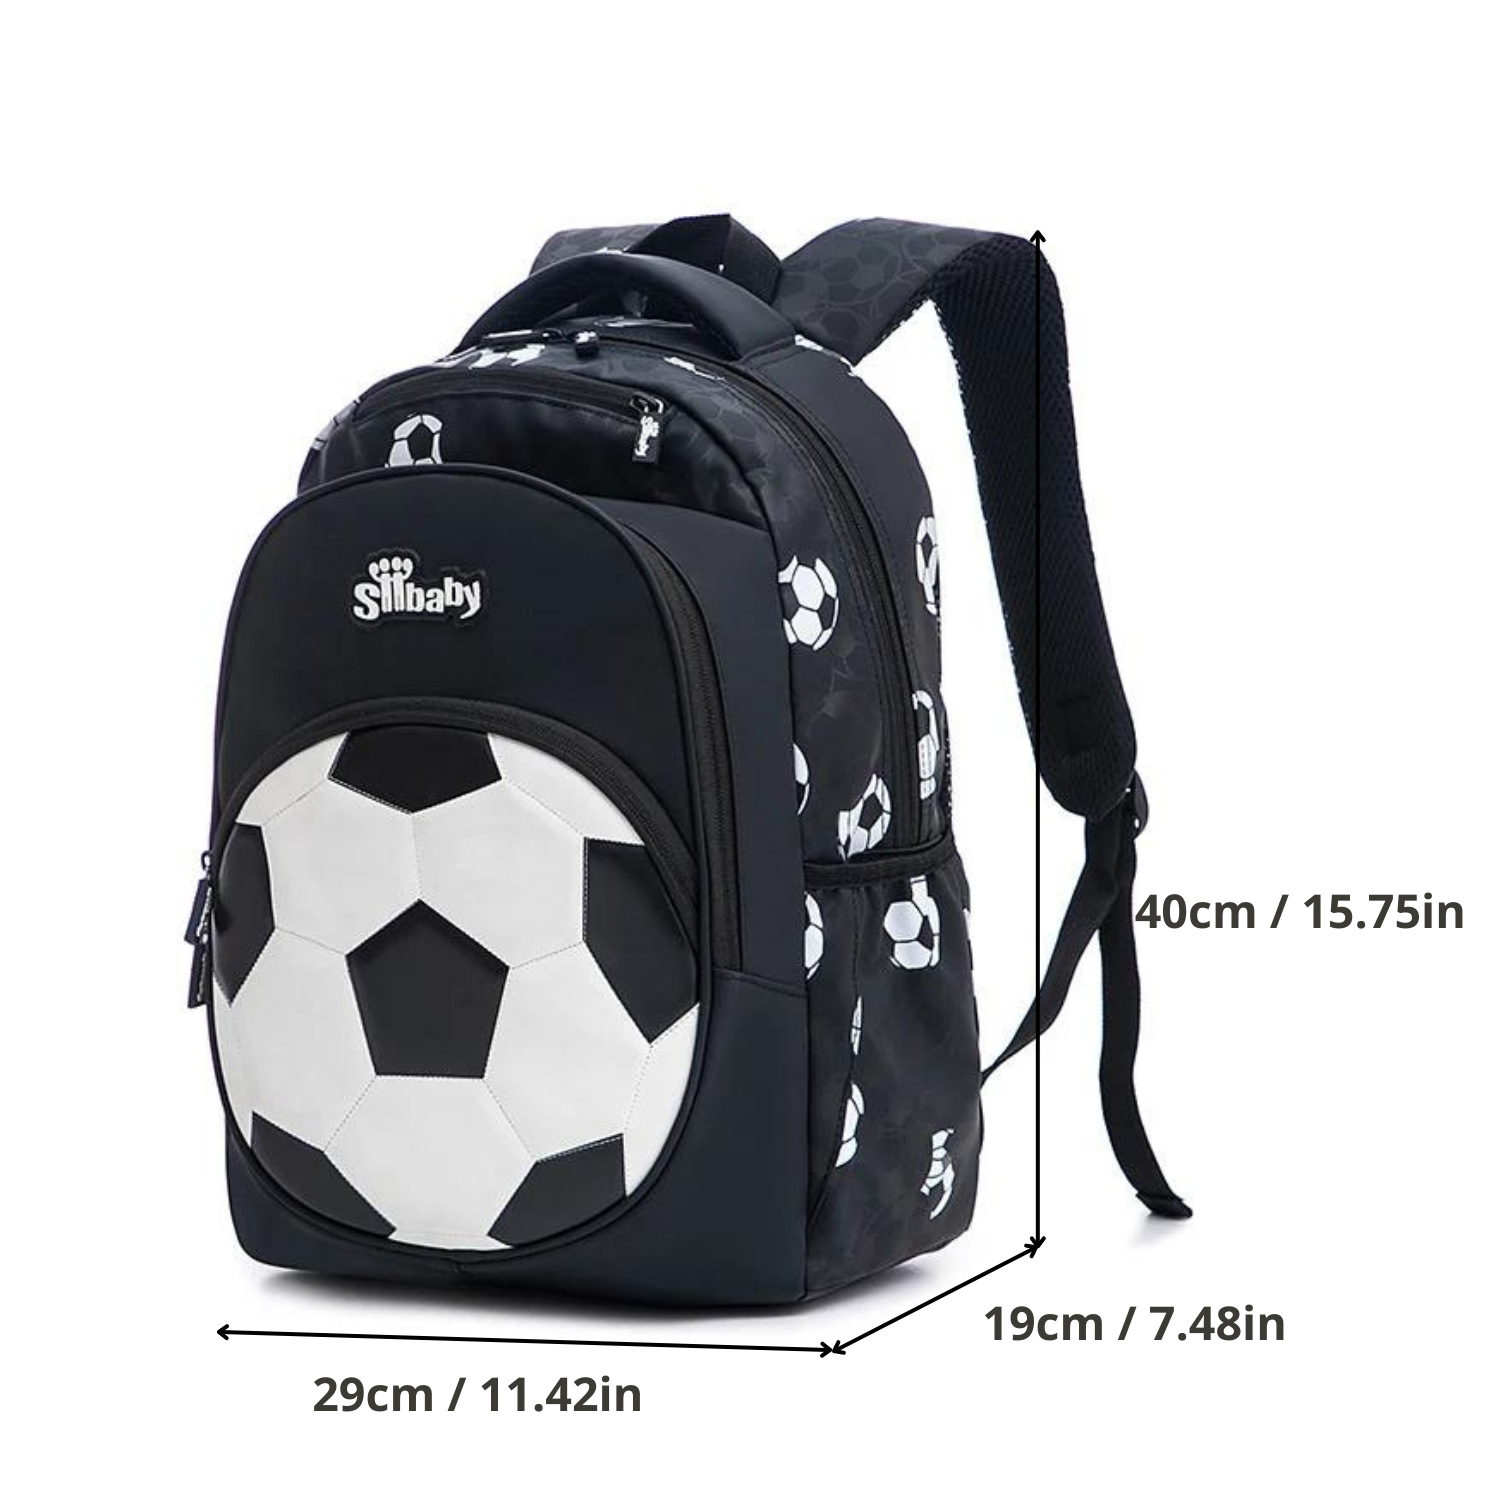 Soccer-Themed Durable School Backpack for Boys